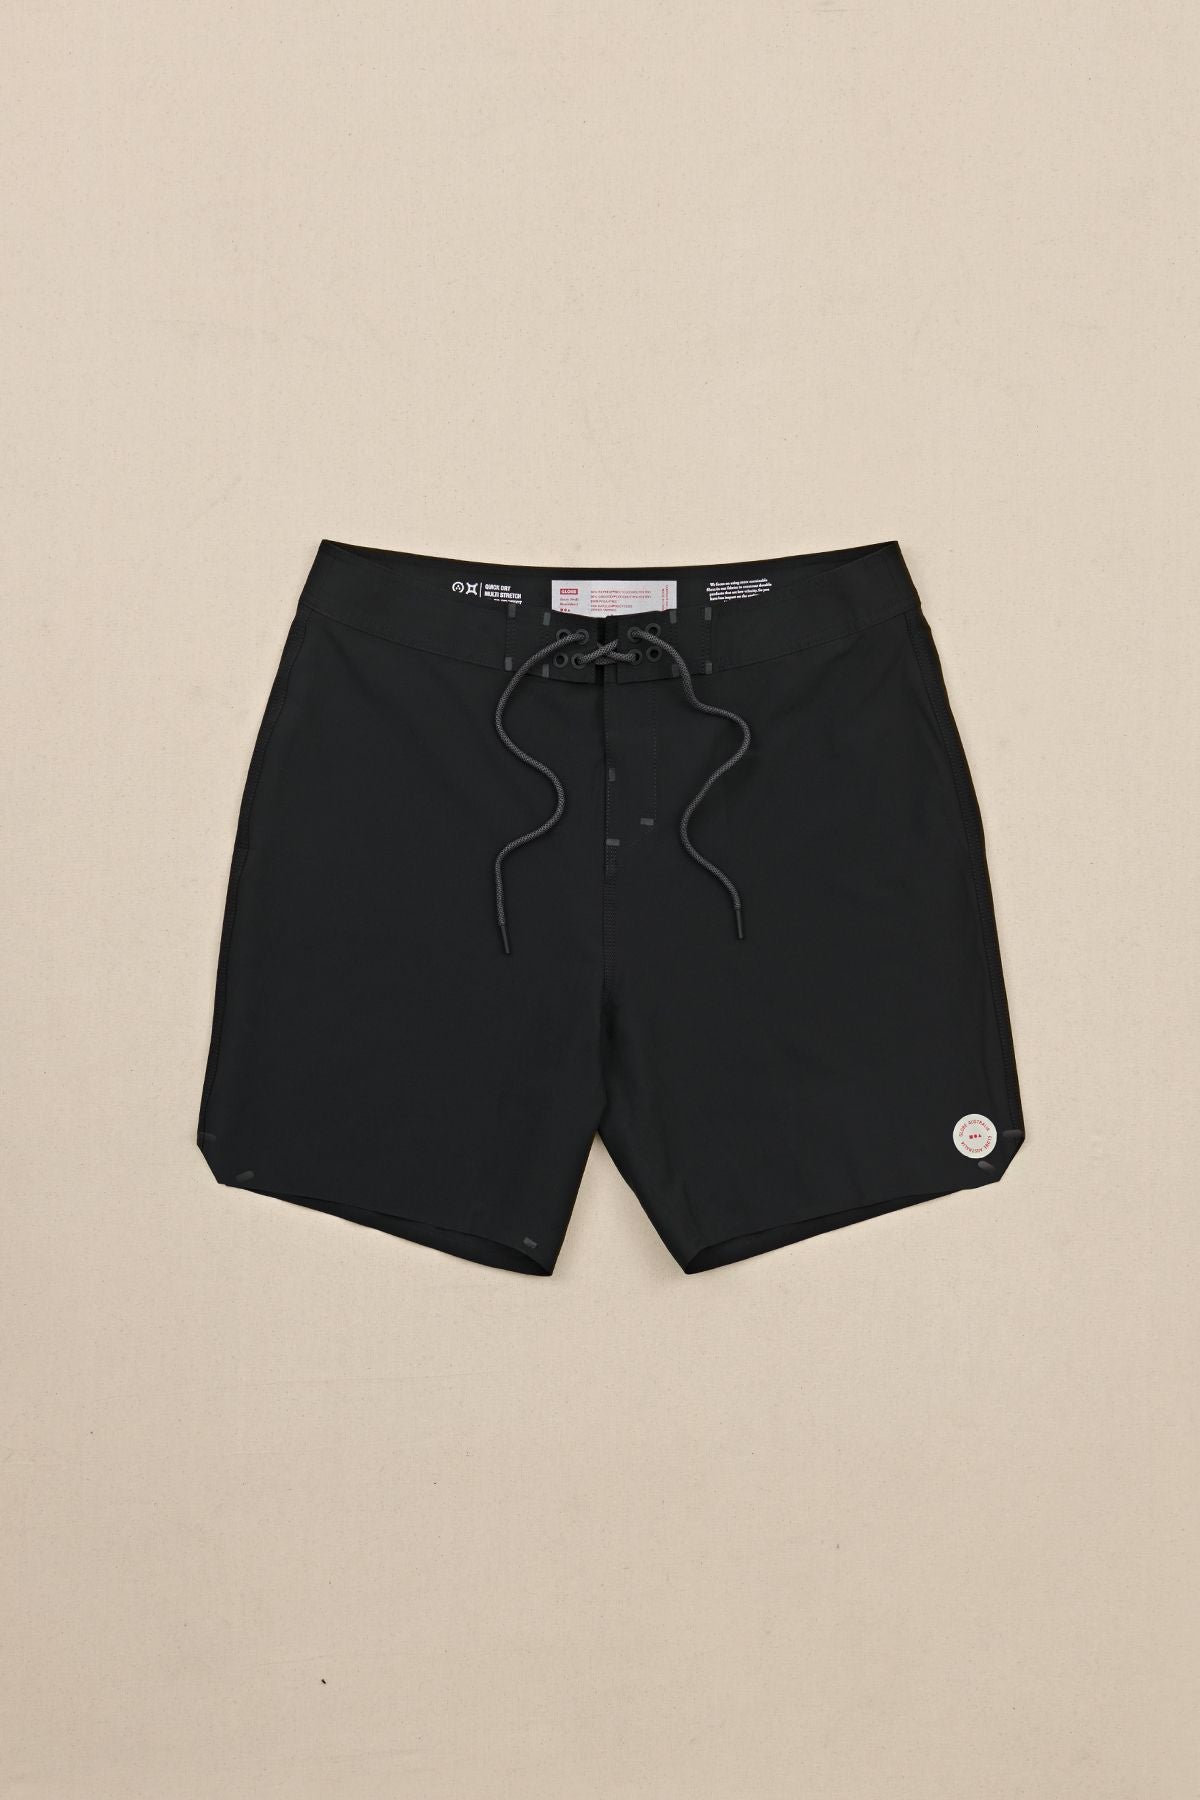 Globe Shorts - Every Swell Boardshort in Black